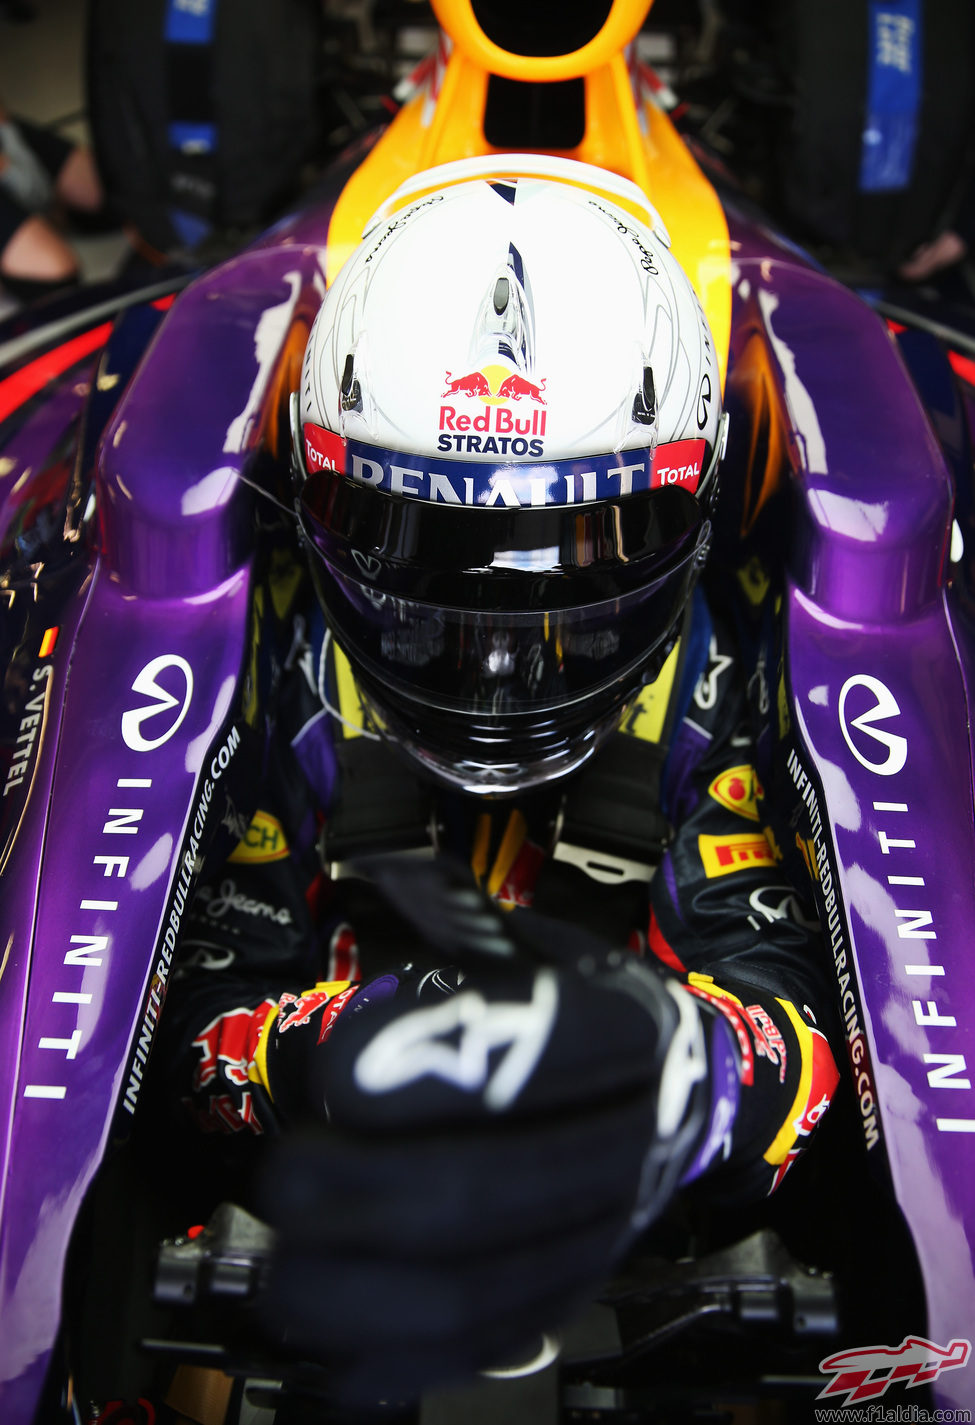 Sebastian Vettel en su box